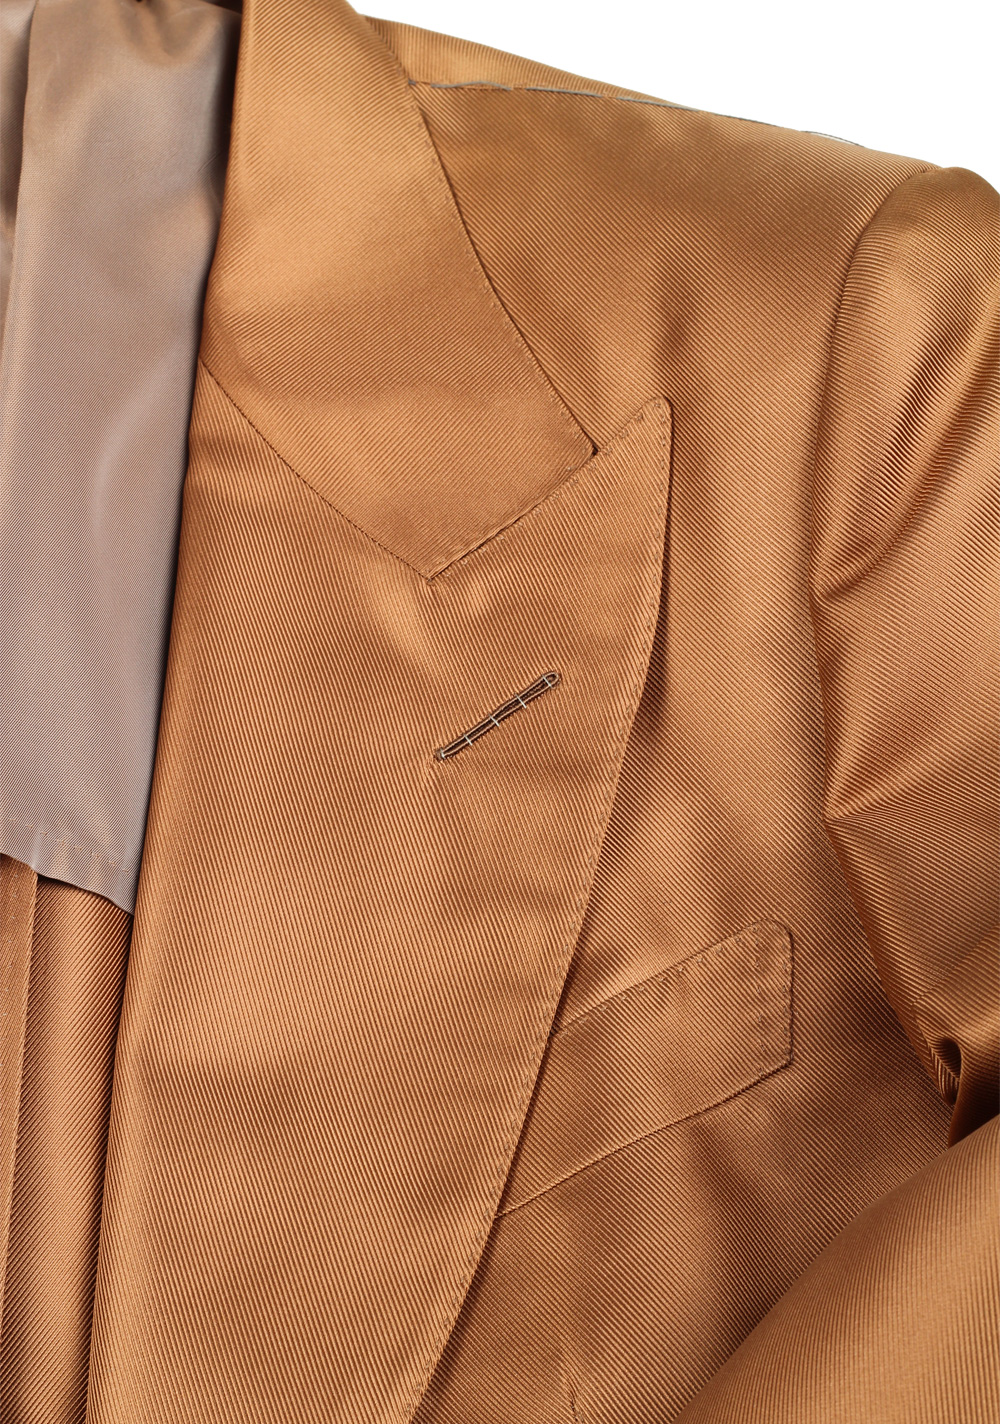 TOM FORD Atticus Brown Silk Suit Size 46 / 36R U.S. | Costume Limité